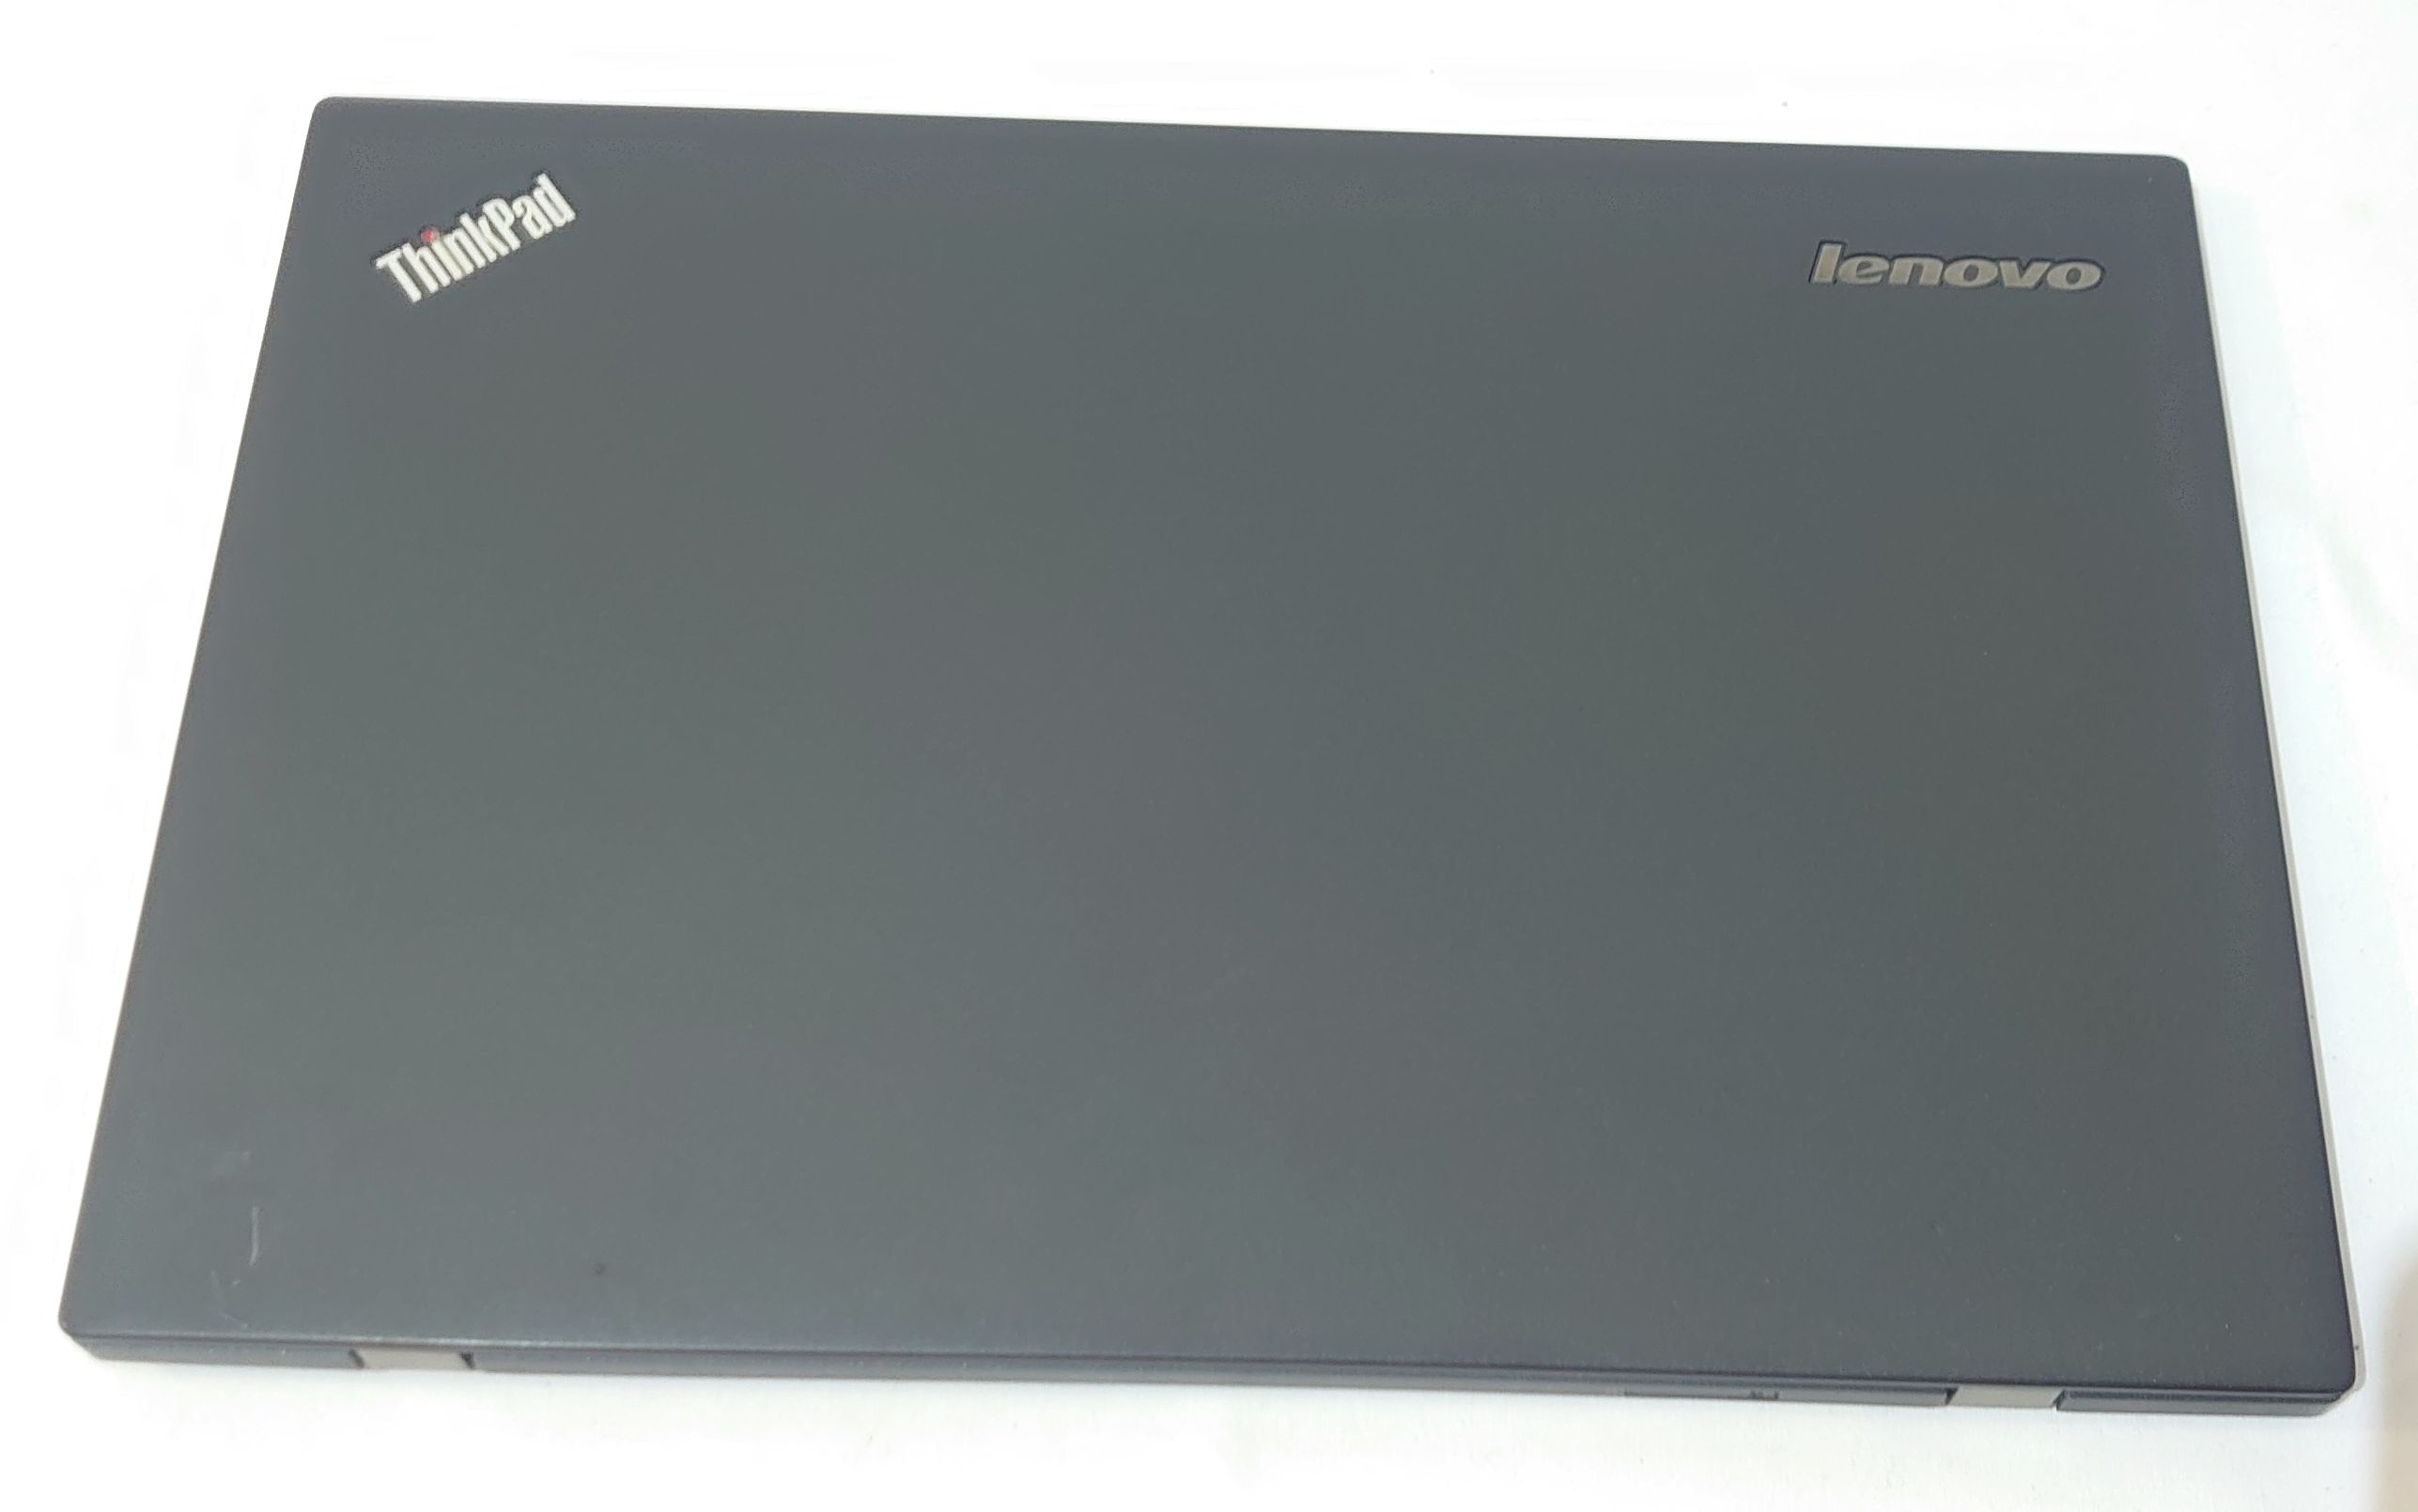 Lenovo ThinkPad X1 Carbon i5, 8GB RAM (LO168)